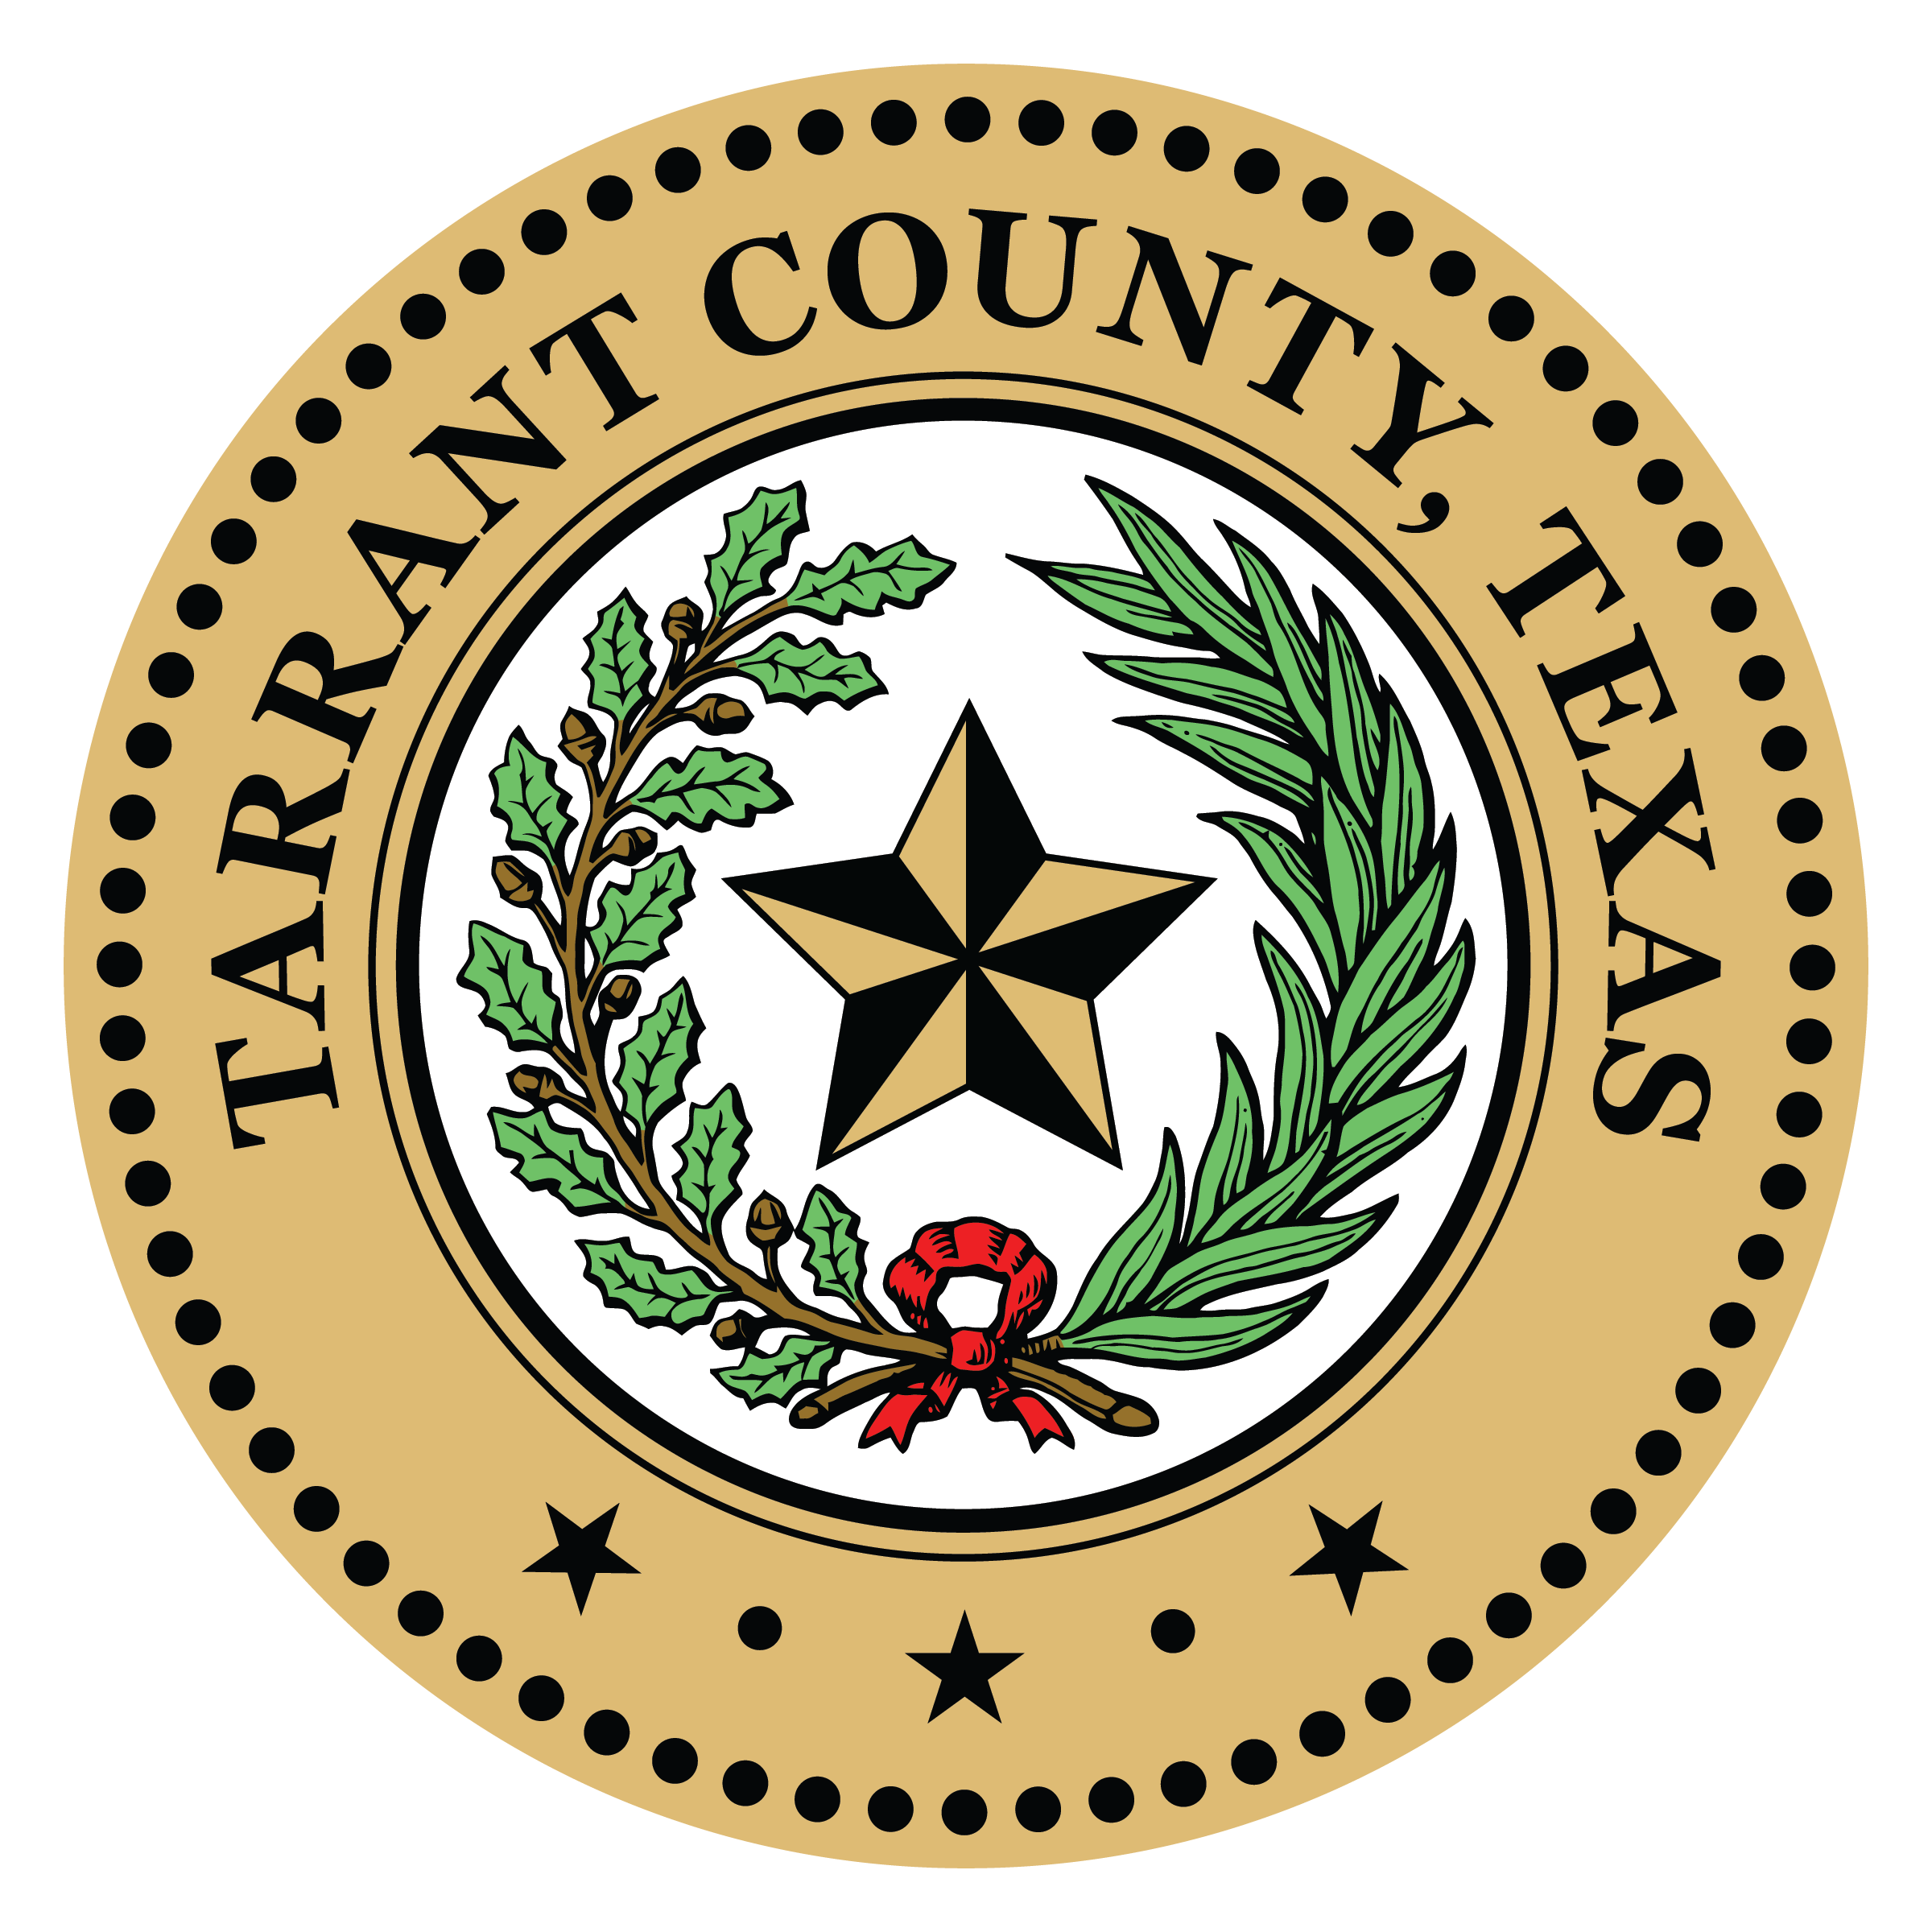 Tarrant County Banner Logo